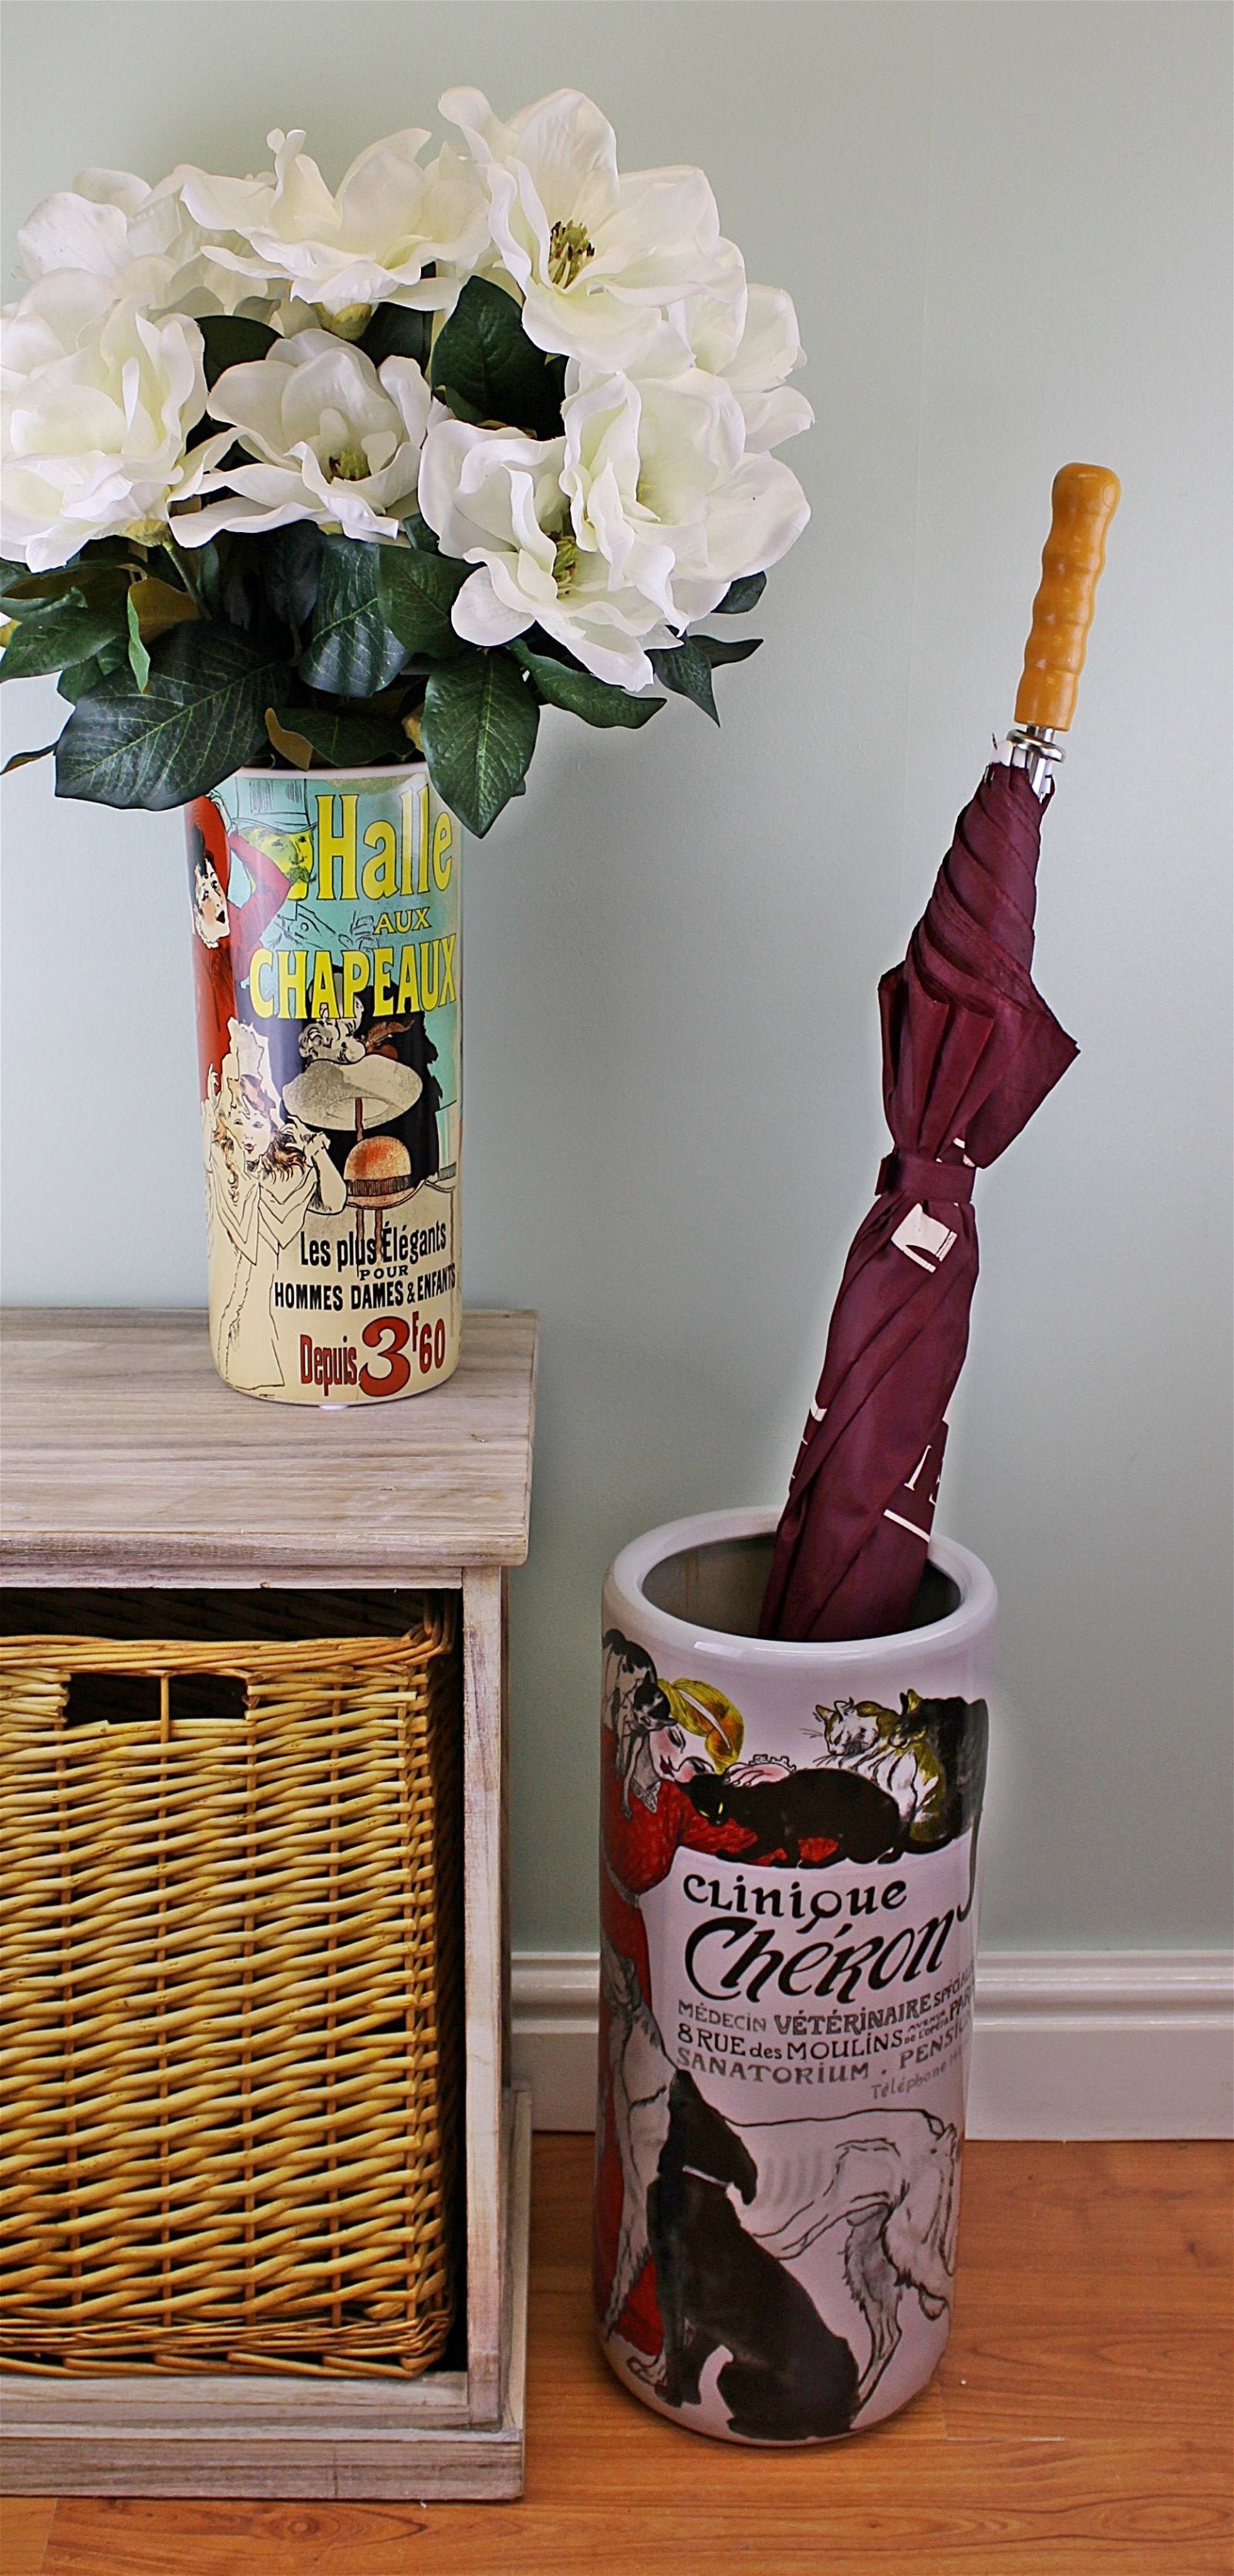 Umbrella Stand, Clinique Cheron Design With Free Vase